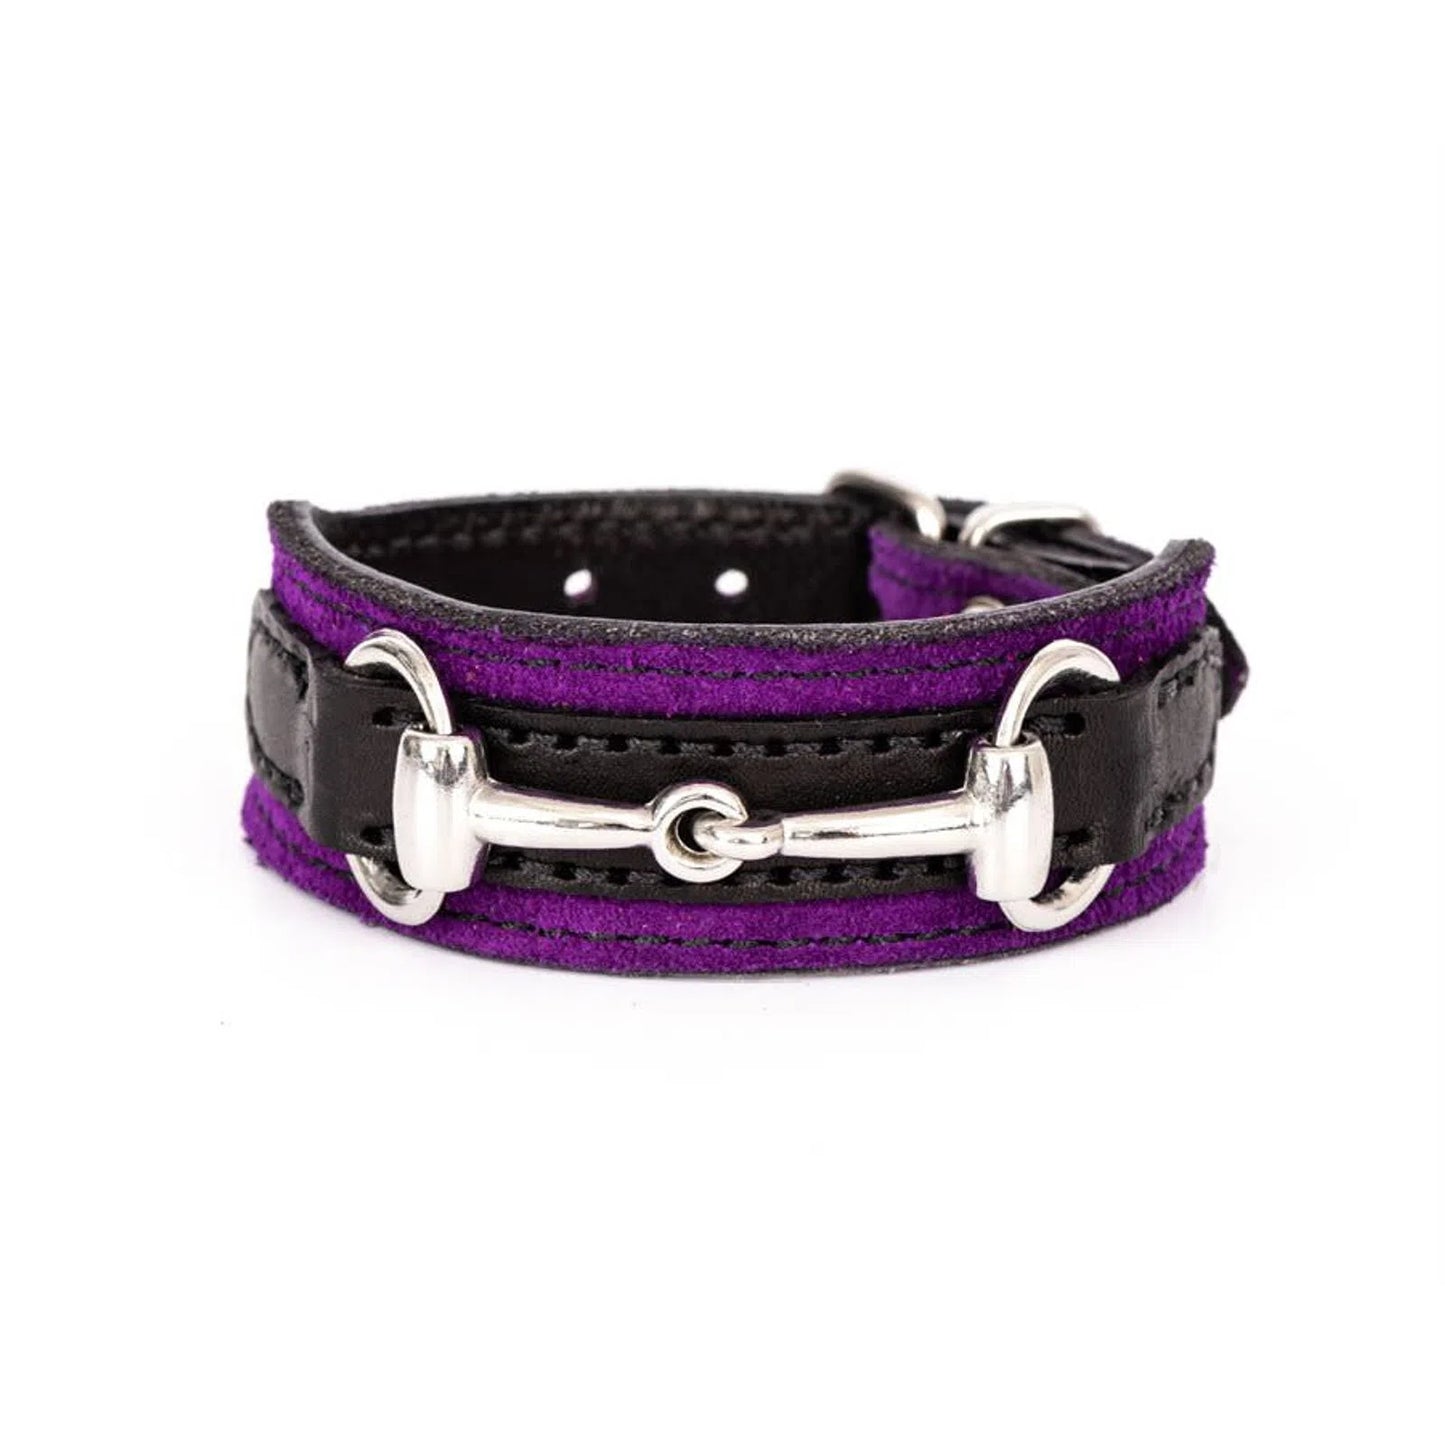 Perri's Bit Bracelet Suede w/Leather Overlay - Silver/Black/Purple